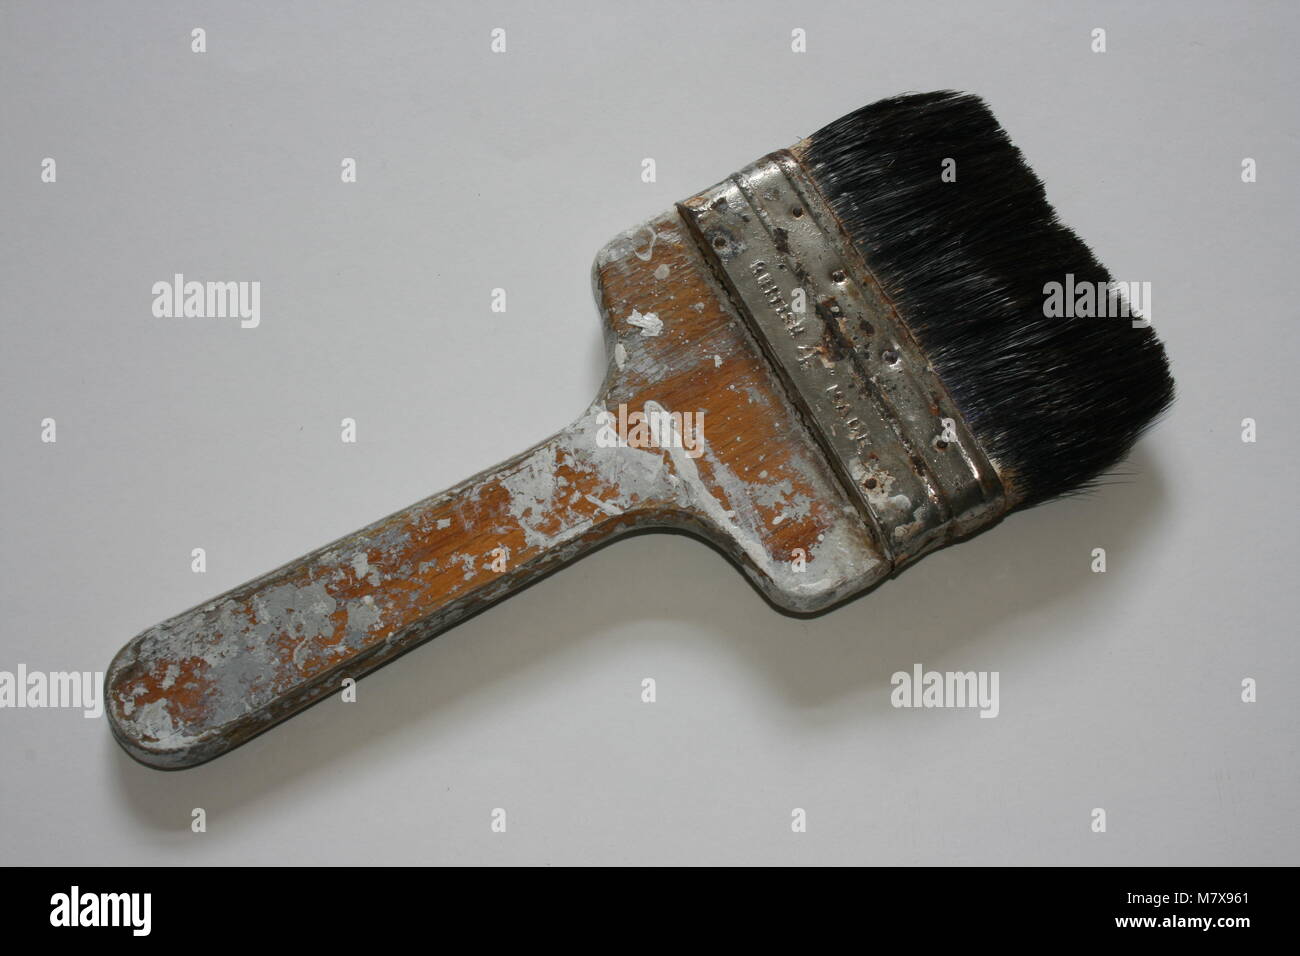 Paint speckled paintbrush Stock Photo - Alamy